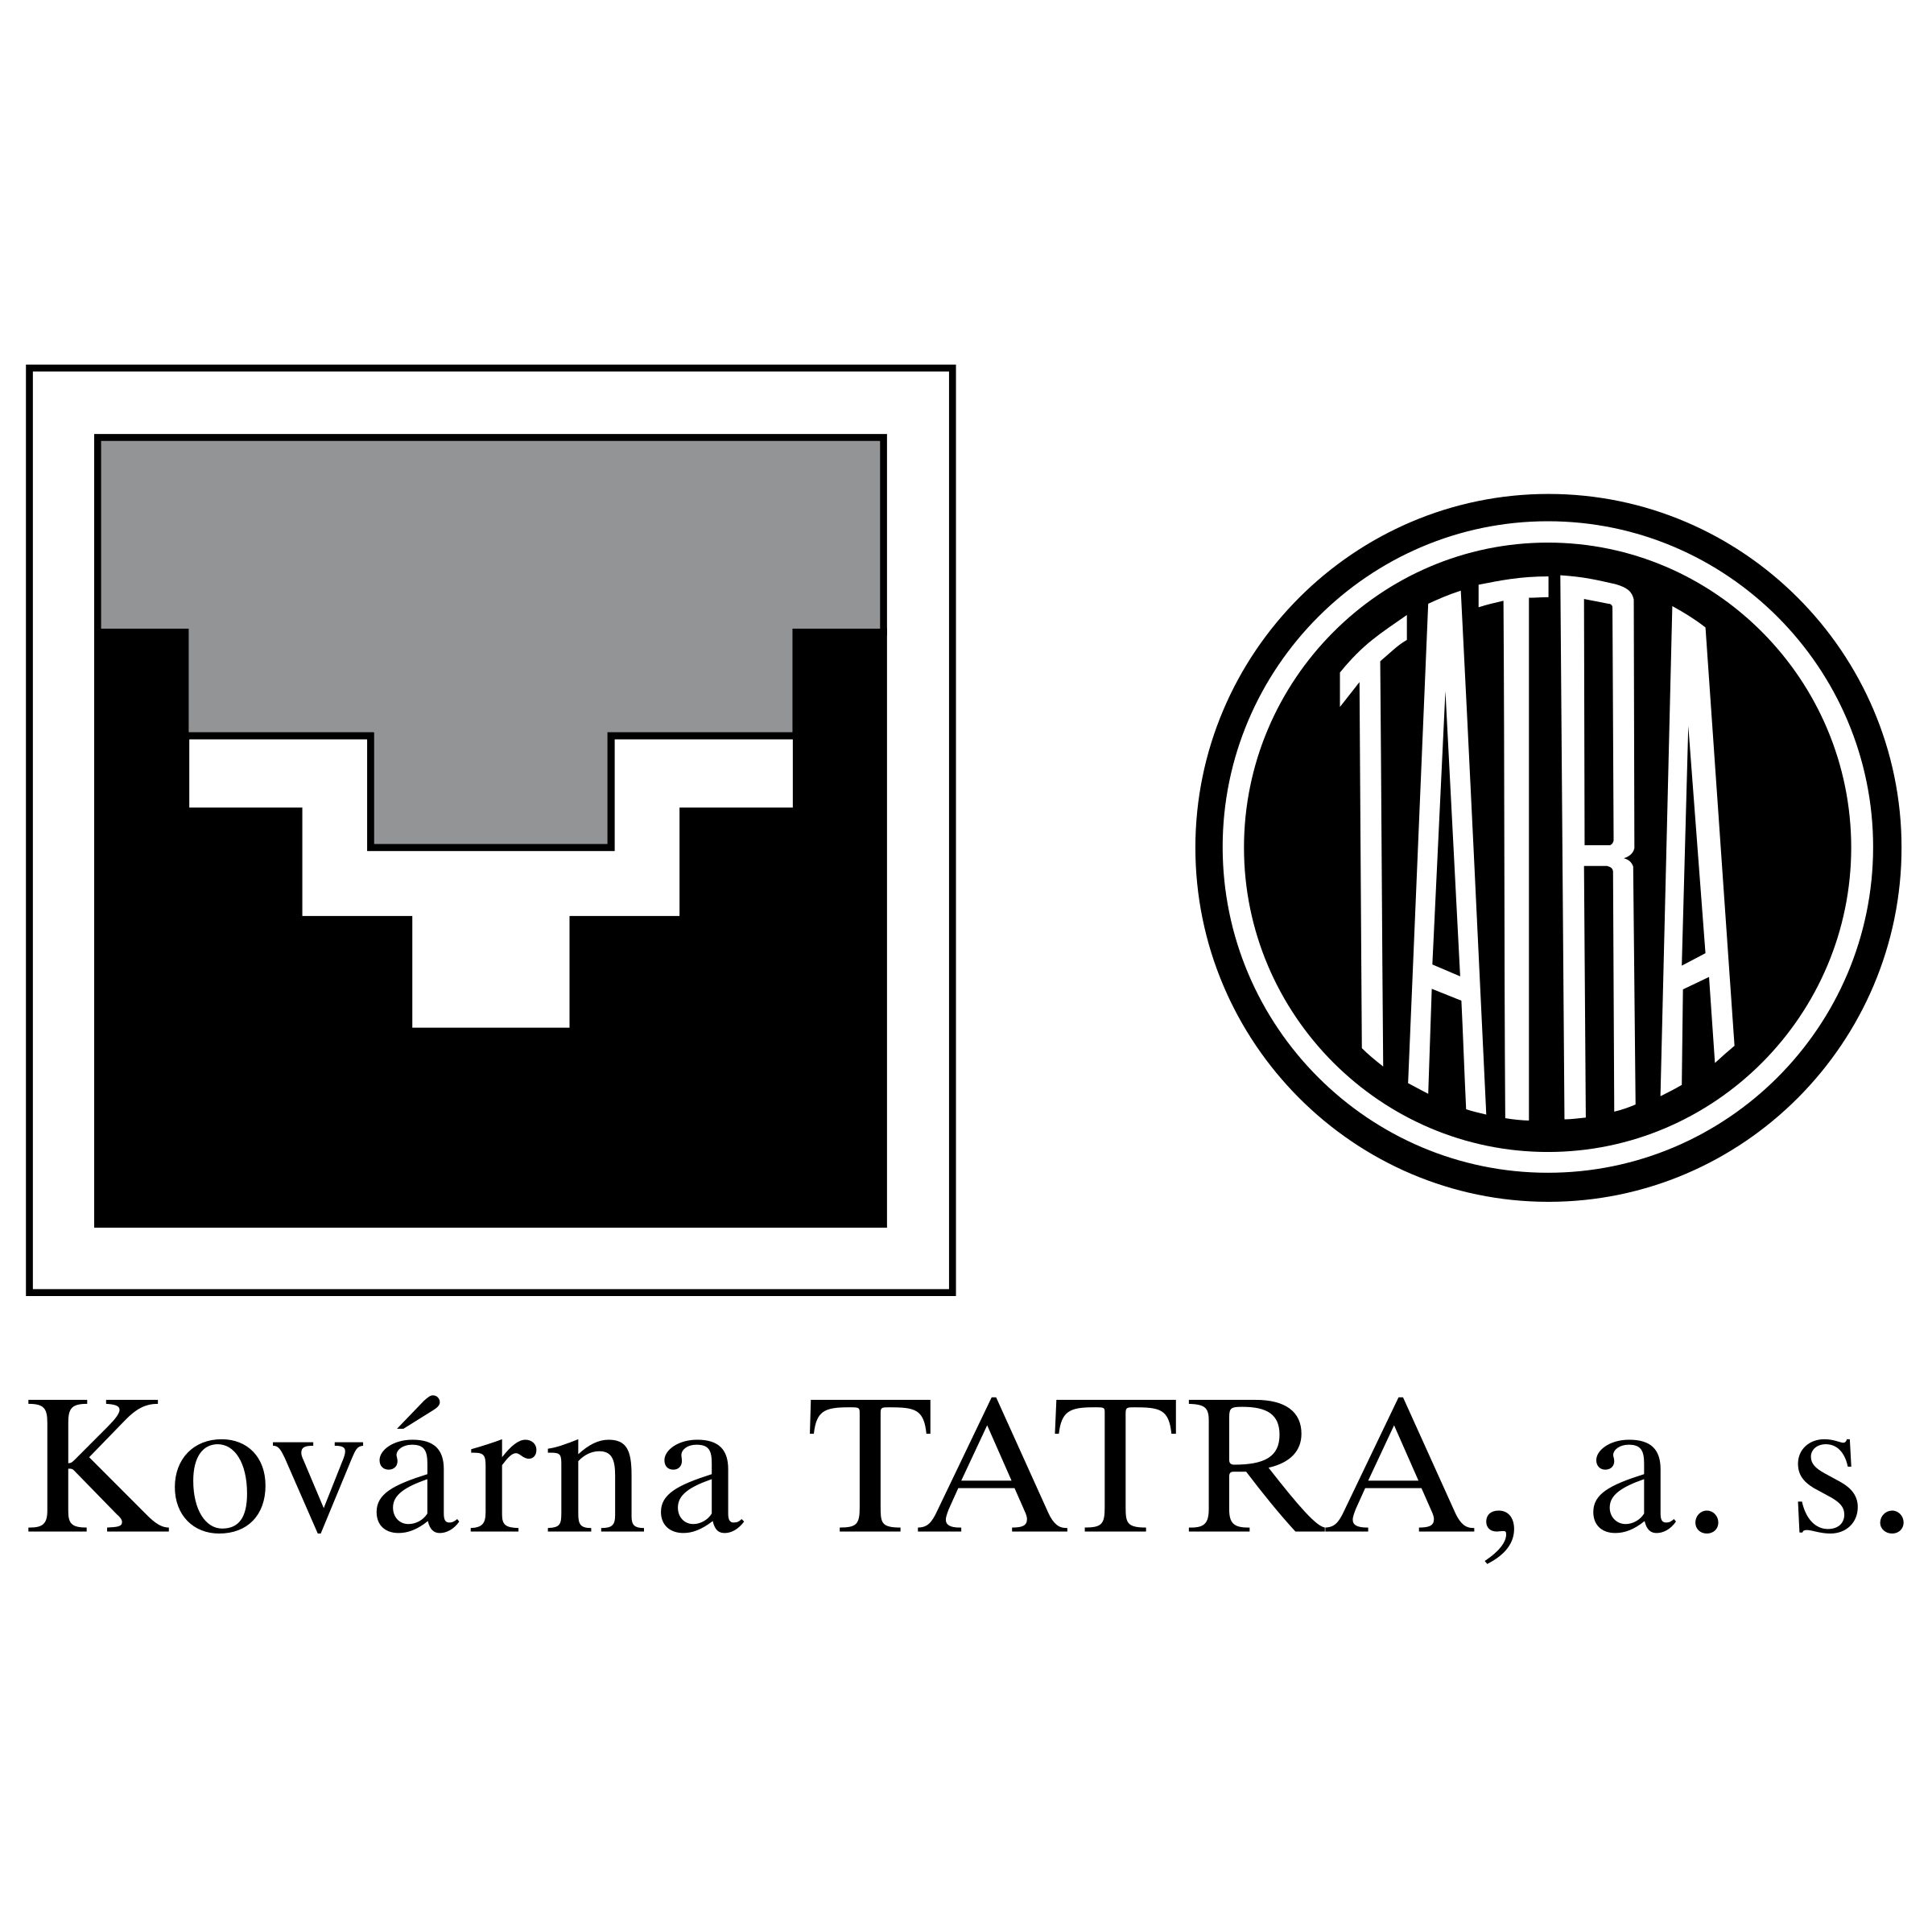 Tatra Logo - Kovarna Tatra Logo PNG Transparent & SVG Vector - Freebie Supply